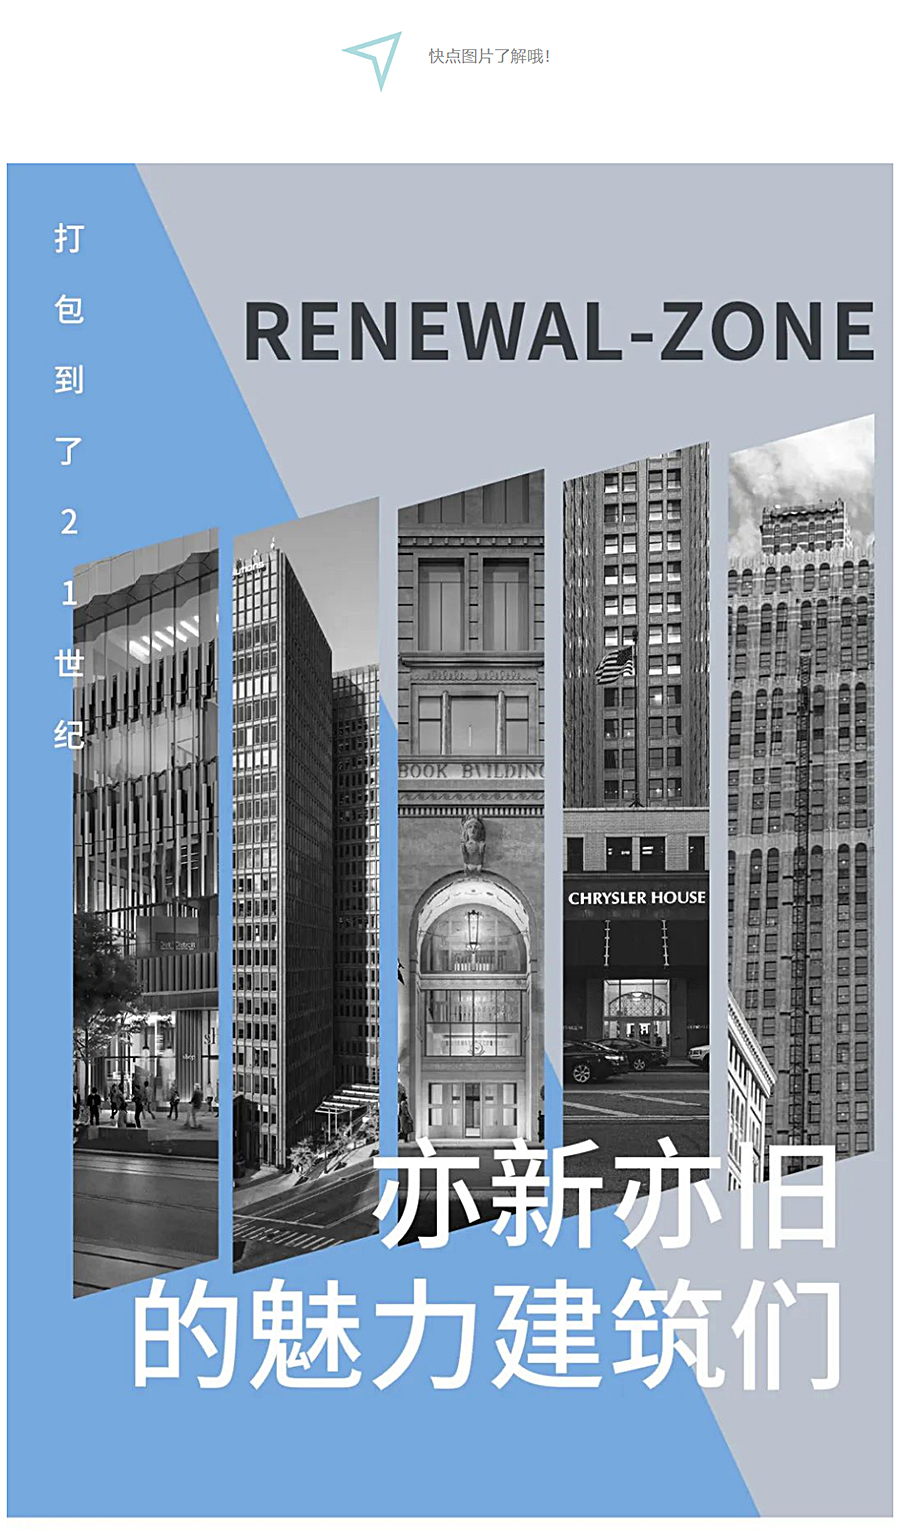 Renewal-Zone：这家开发商将历史建筑们修复更新，打包到了21世纪_0001_图层-2.jpg